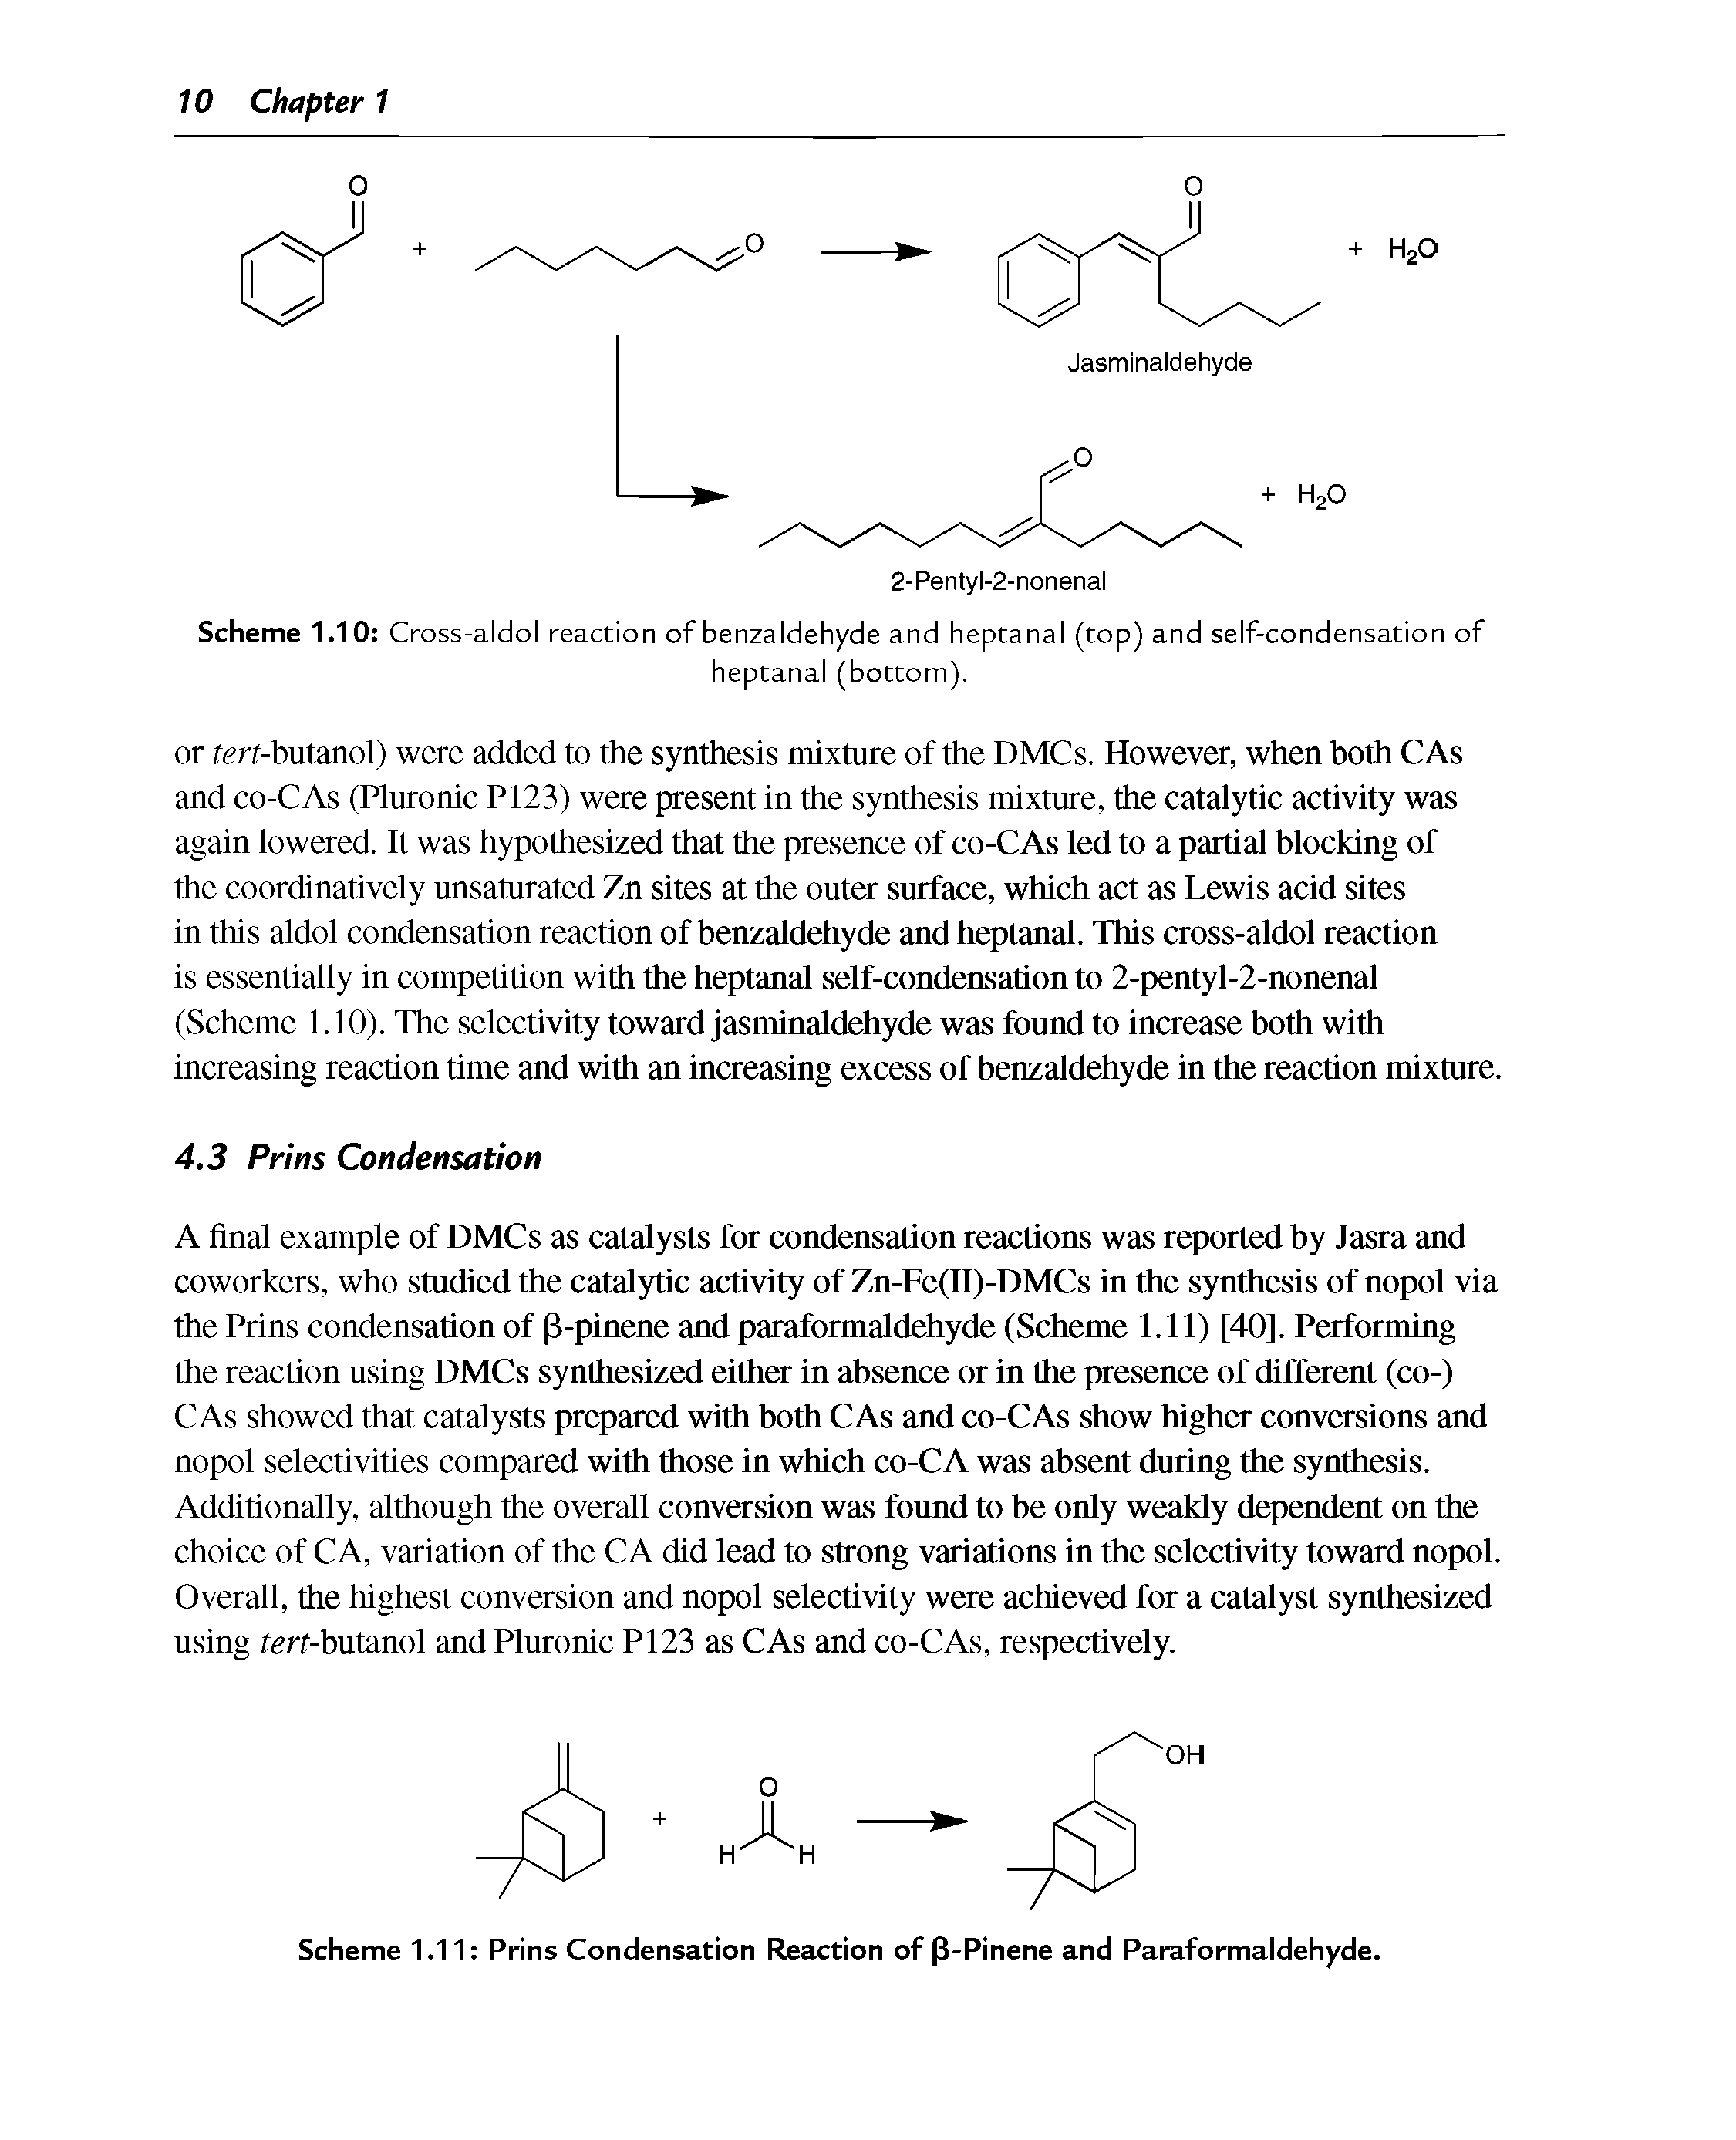 Scheme 1.11 Prins Condensation Reaction of (3-Pinene and Paraformaldehyde.